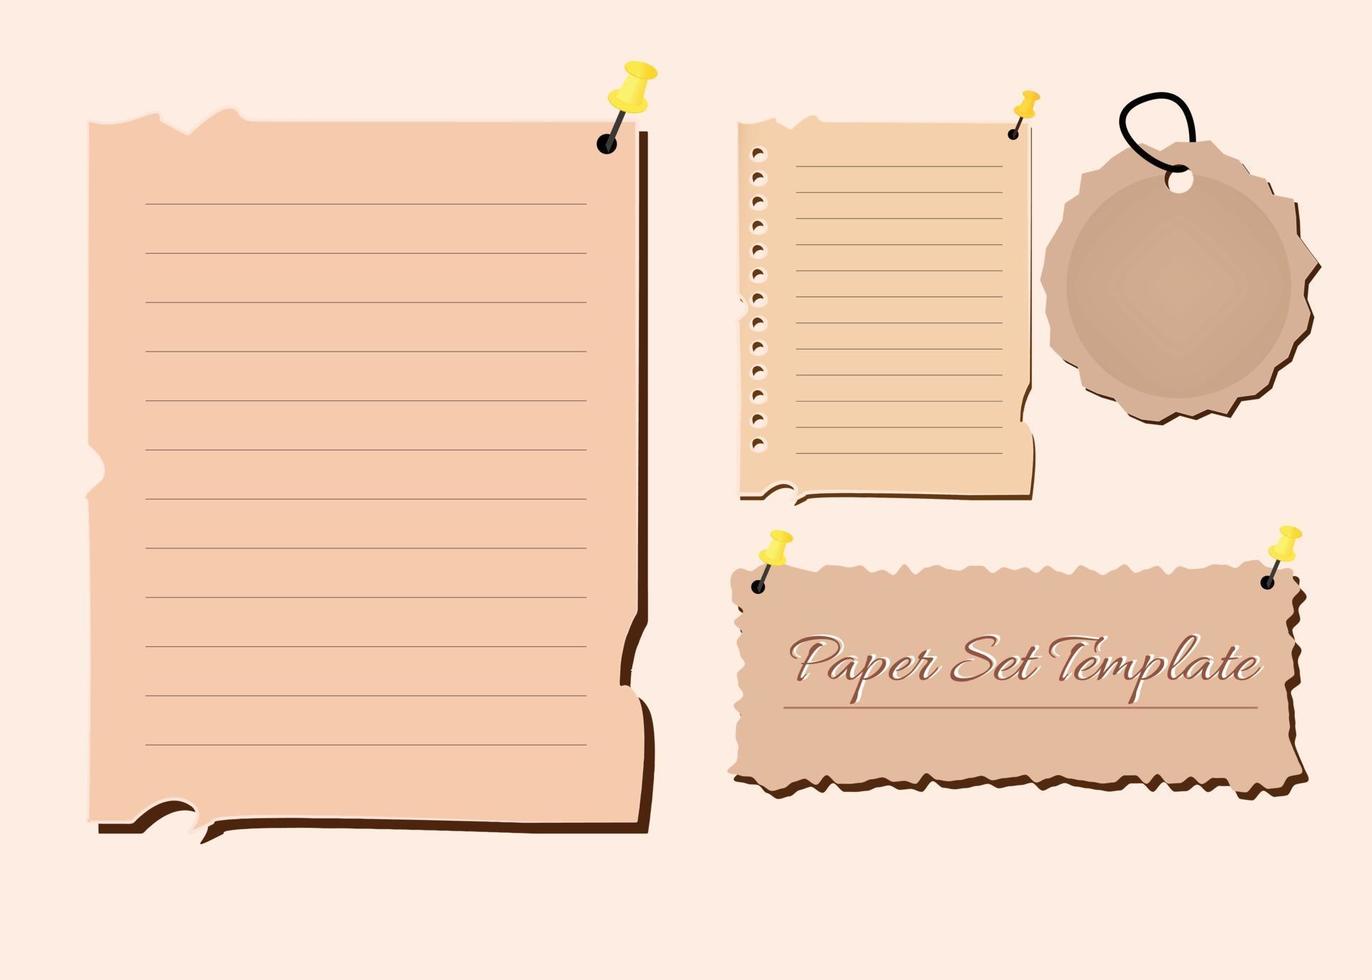 Paper Set Template Design vector